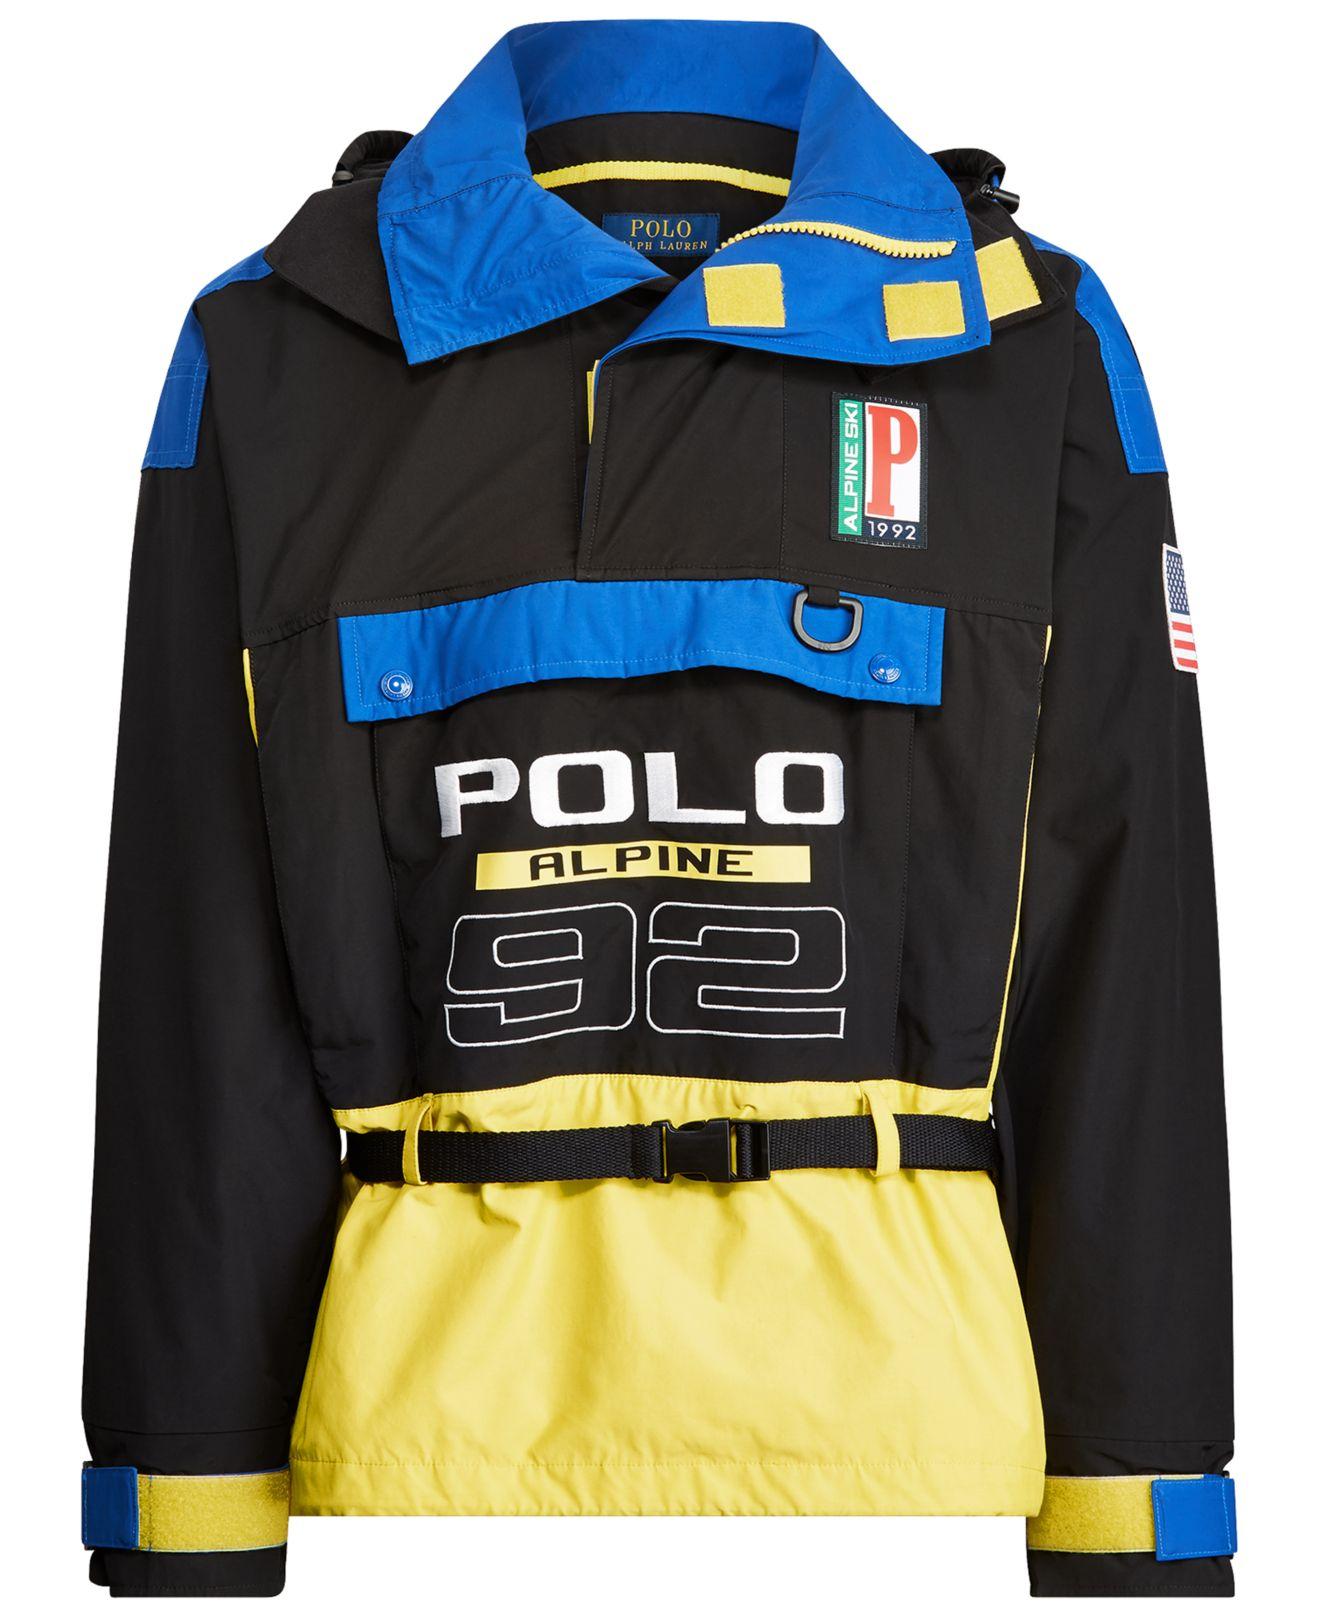 black and yellow polo jacket